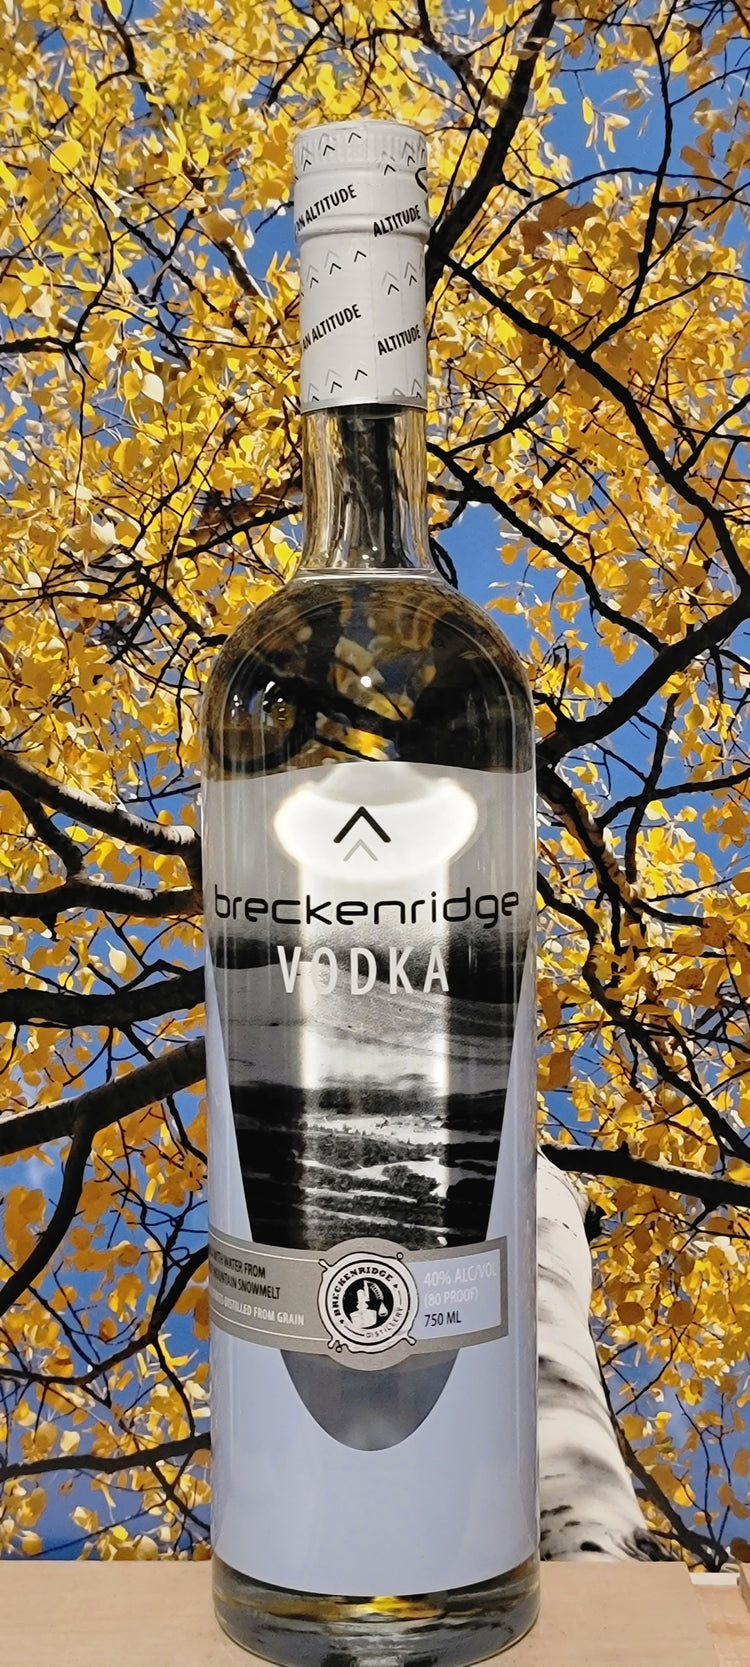 Breckenridge vodka